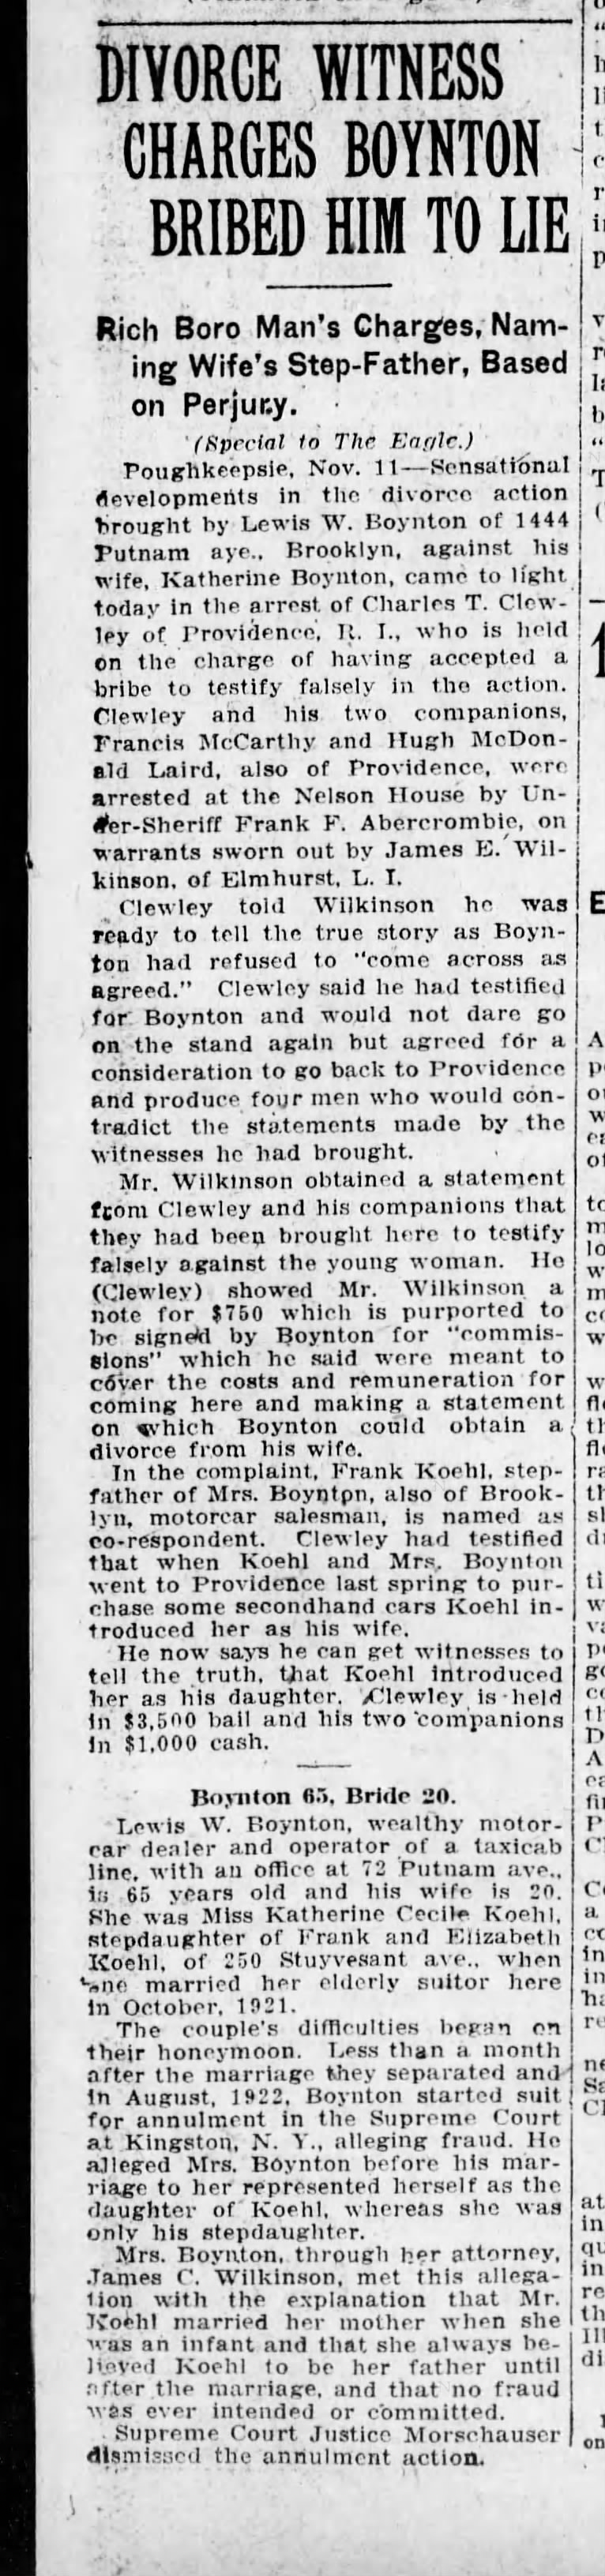 Katherine Boynton - Brooklyn Daily Eagle - 11/12/1922